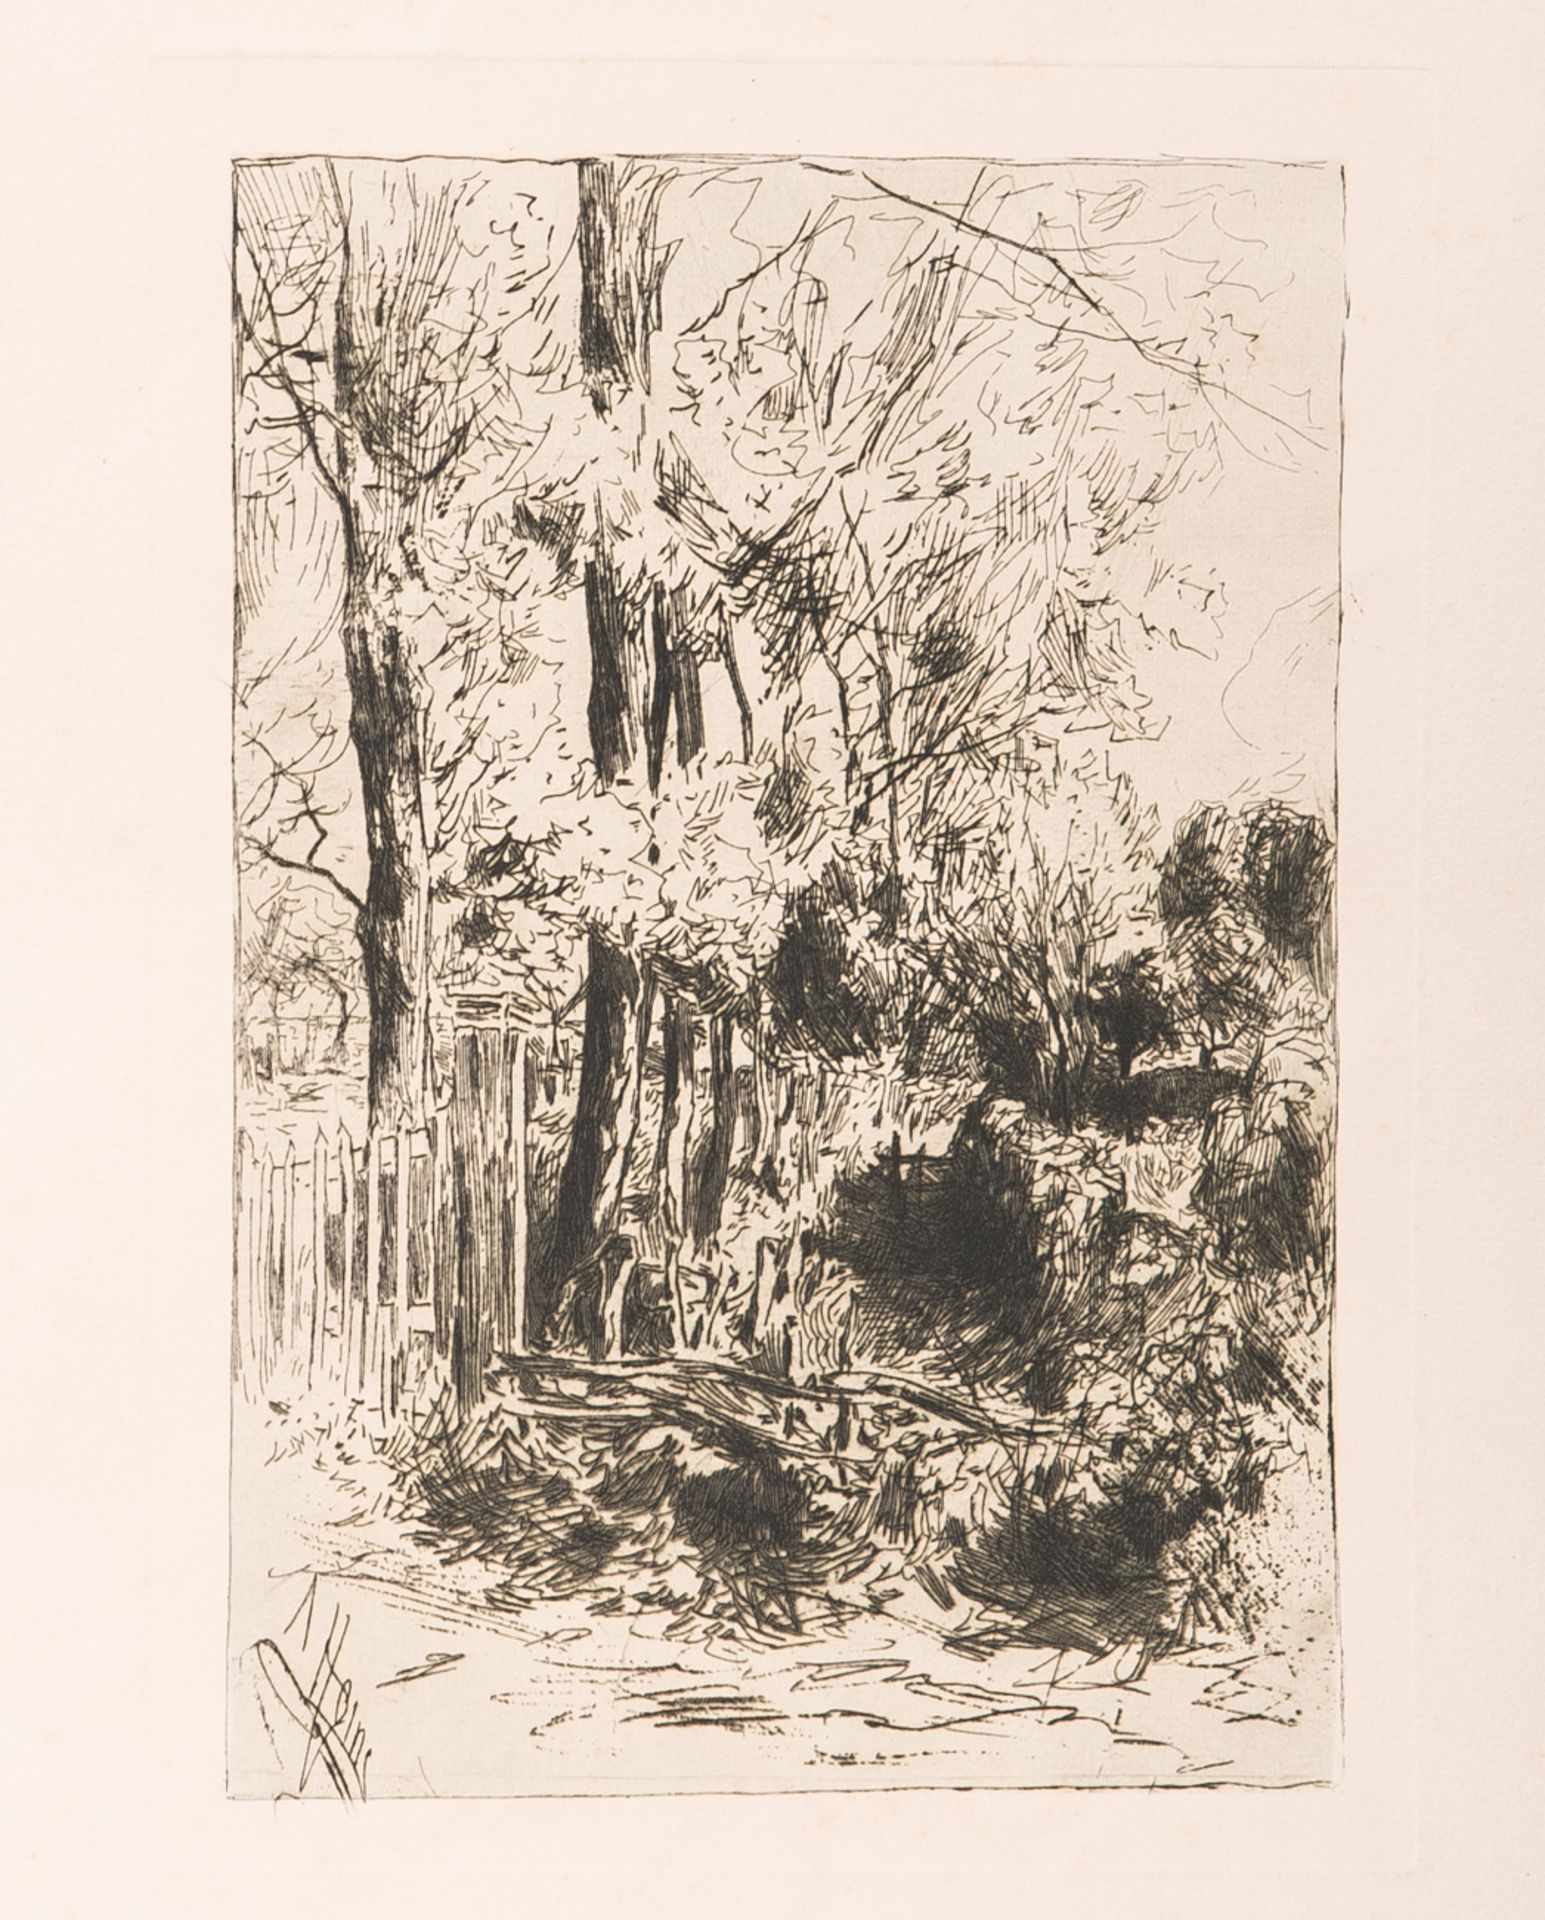 Heins, Armand (1856 - 1938), "Garten",